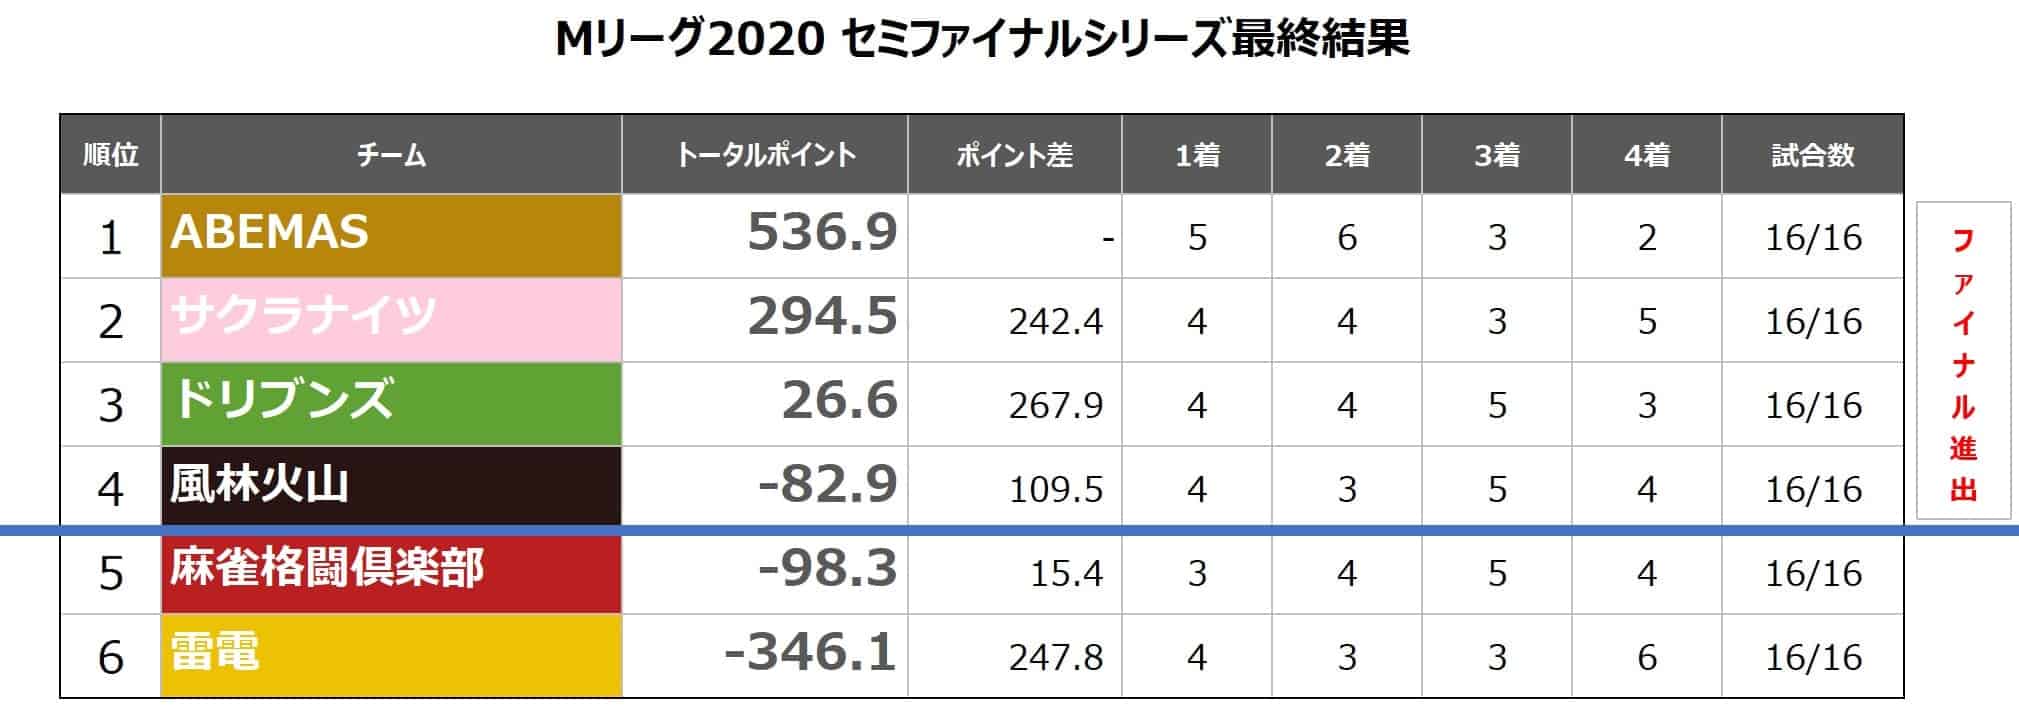 Mリーグ2020セミ_チームランキング20210430最終